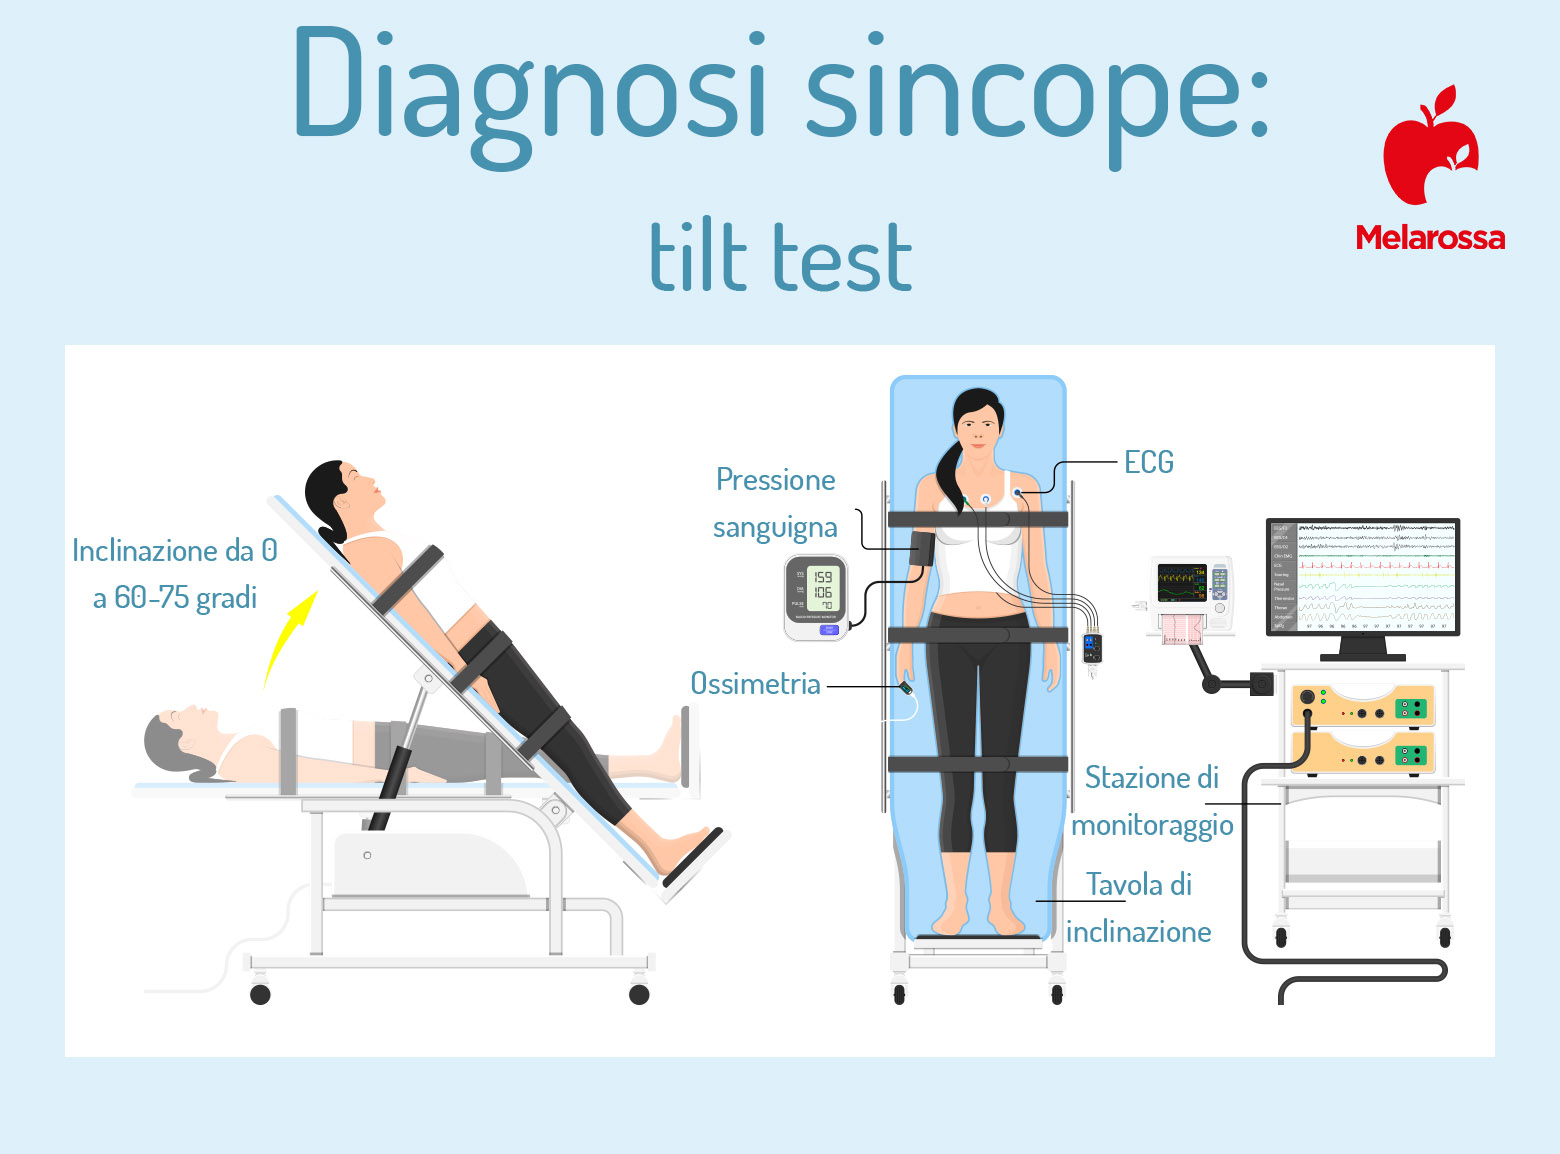 diagnosi per sincope: tilt test